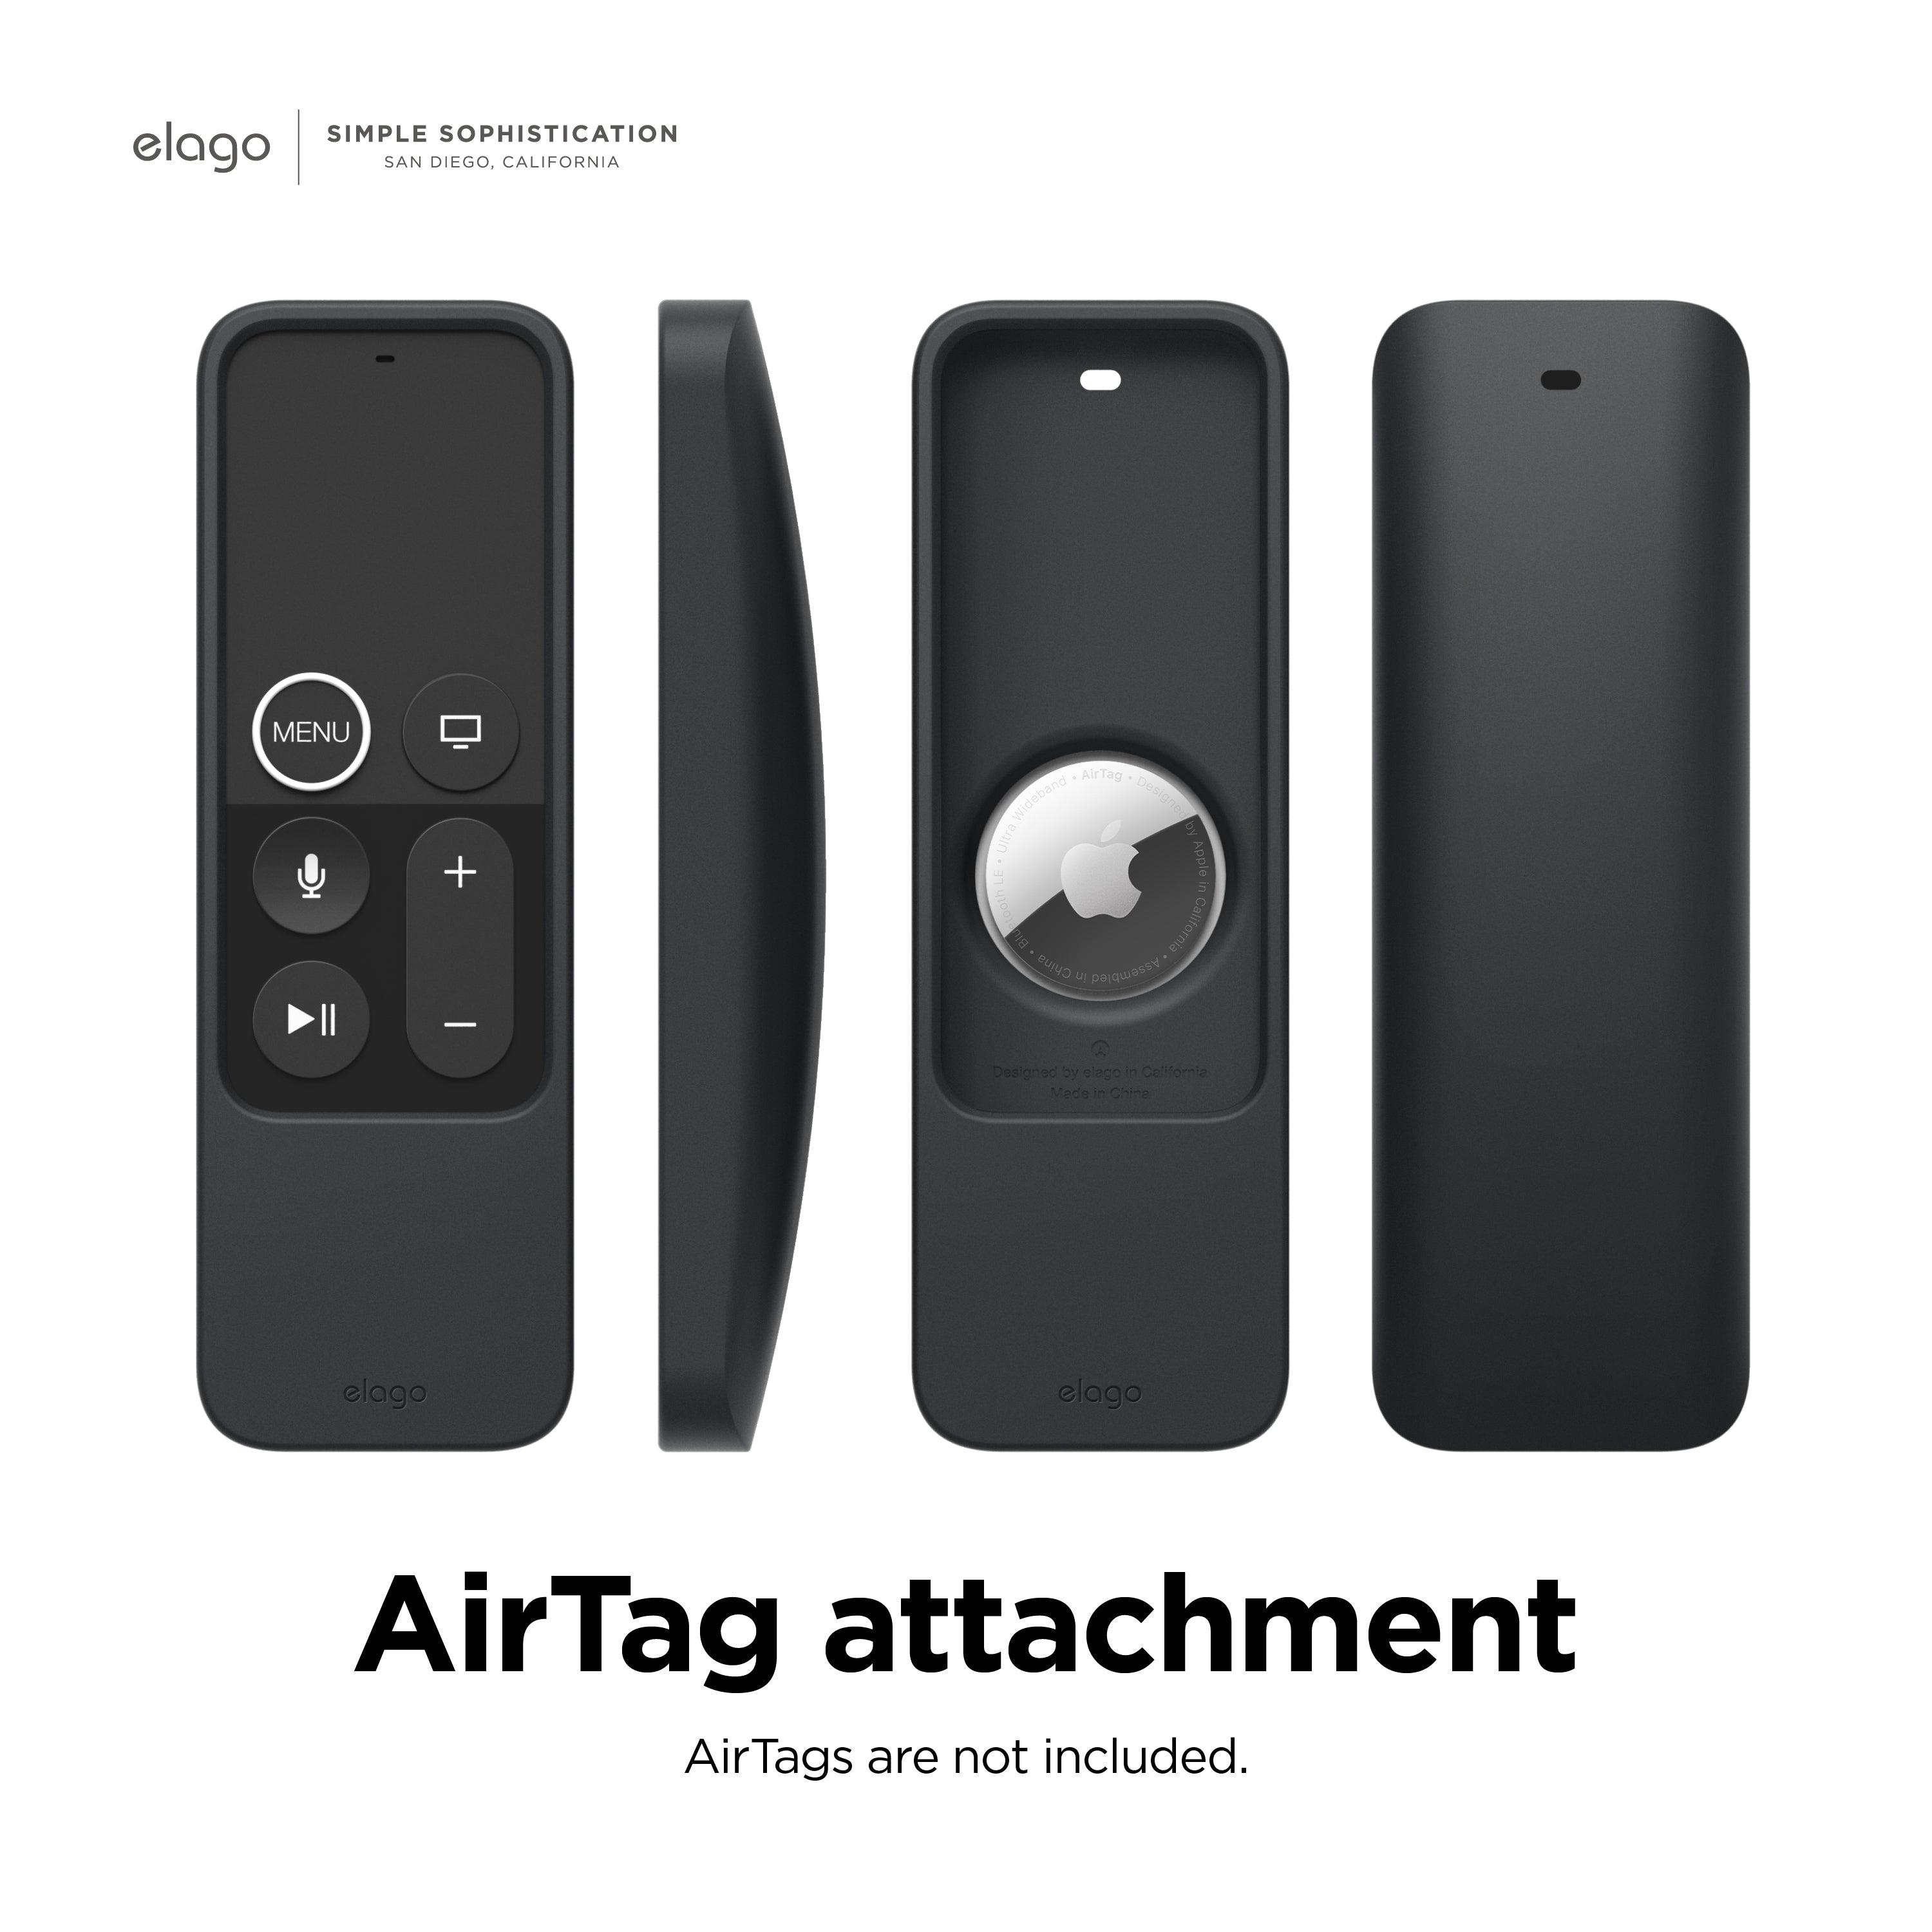 Un étui Elago qui associe la télécommande de l'Apple TV avec un AirTag